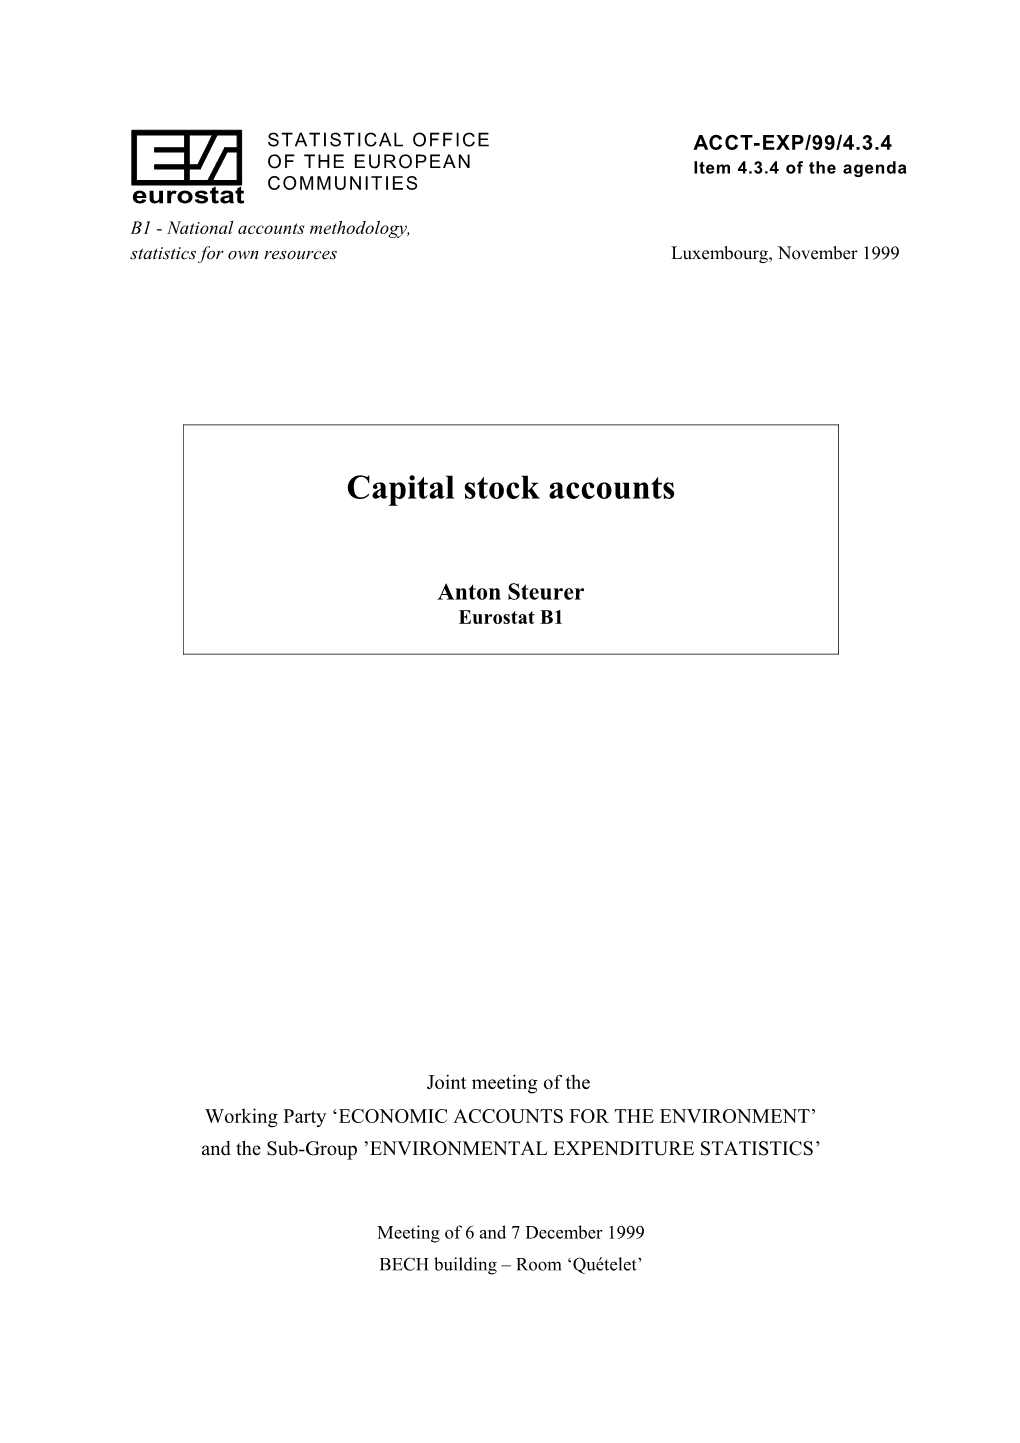 A Description of the German Environmental Capital Stock Model